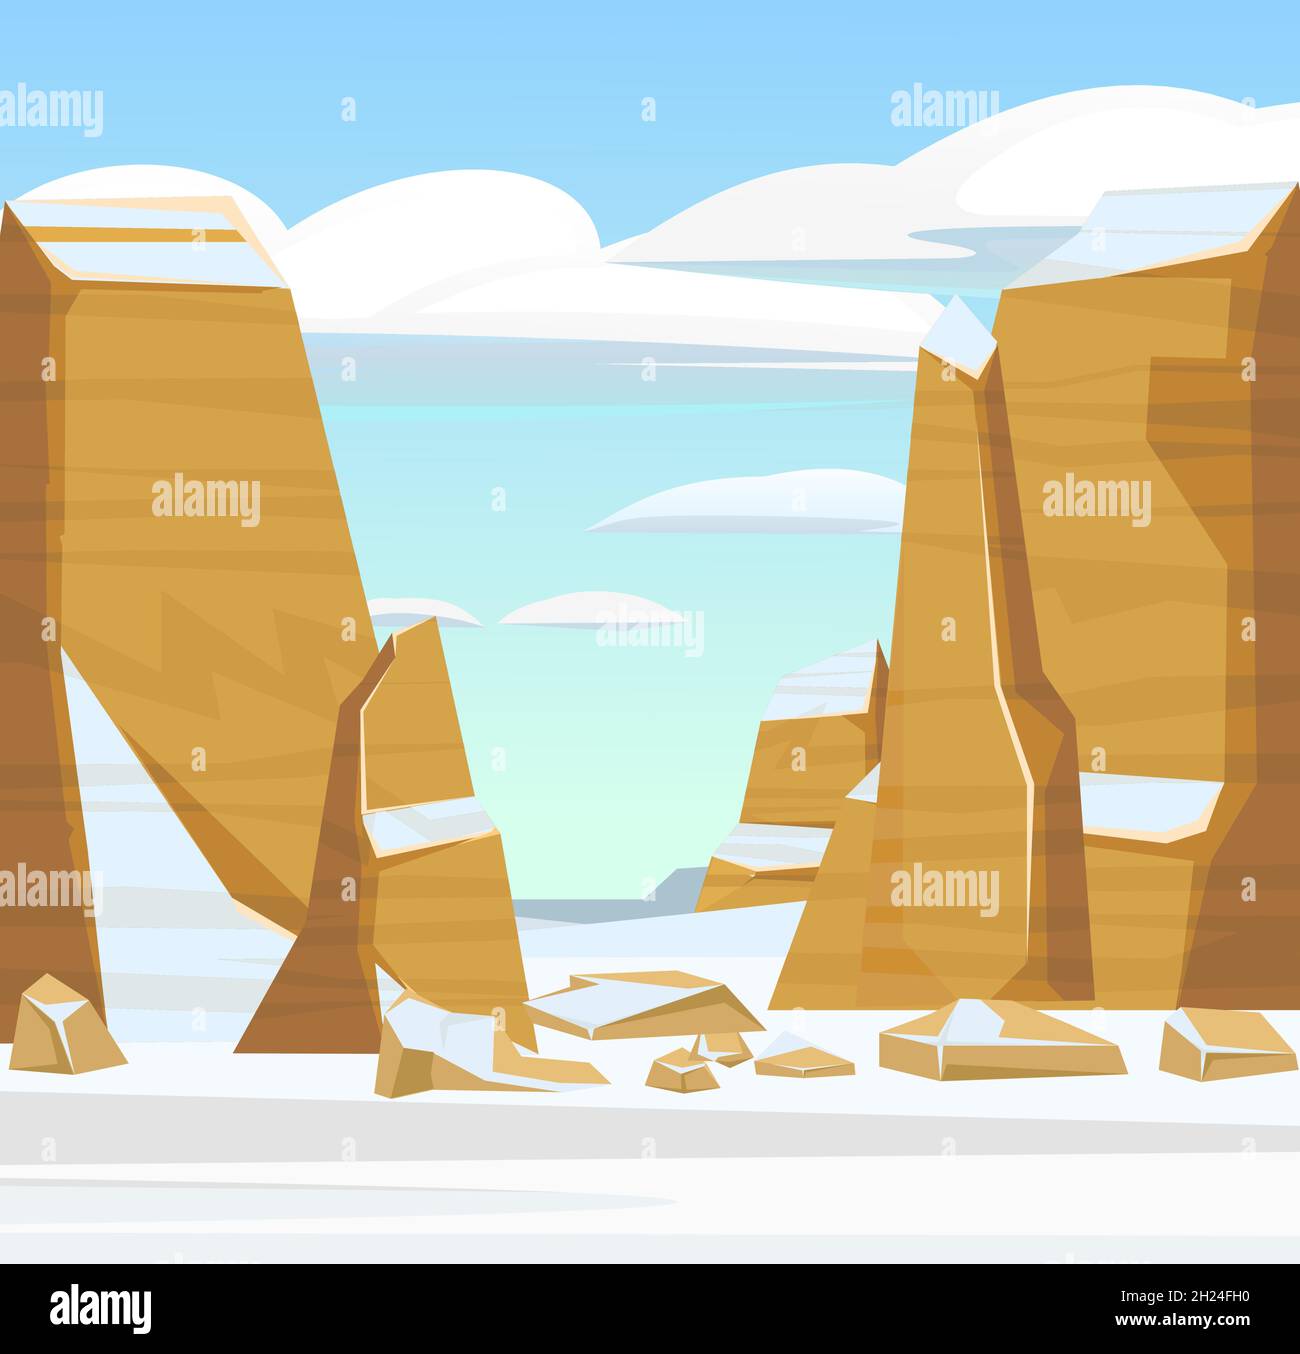 Rocky cliffs. Snowy desert. Desert natural landscape with stones. Illustration in cartoon style flat design. Vector. Stock Vector